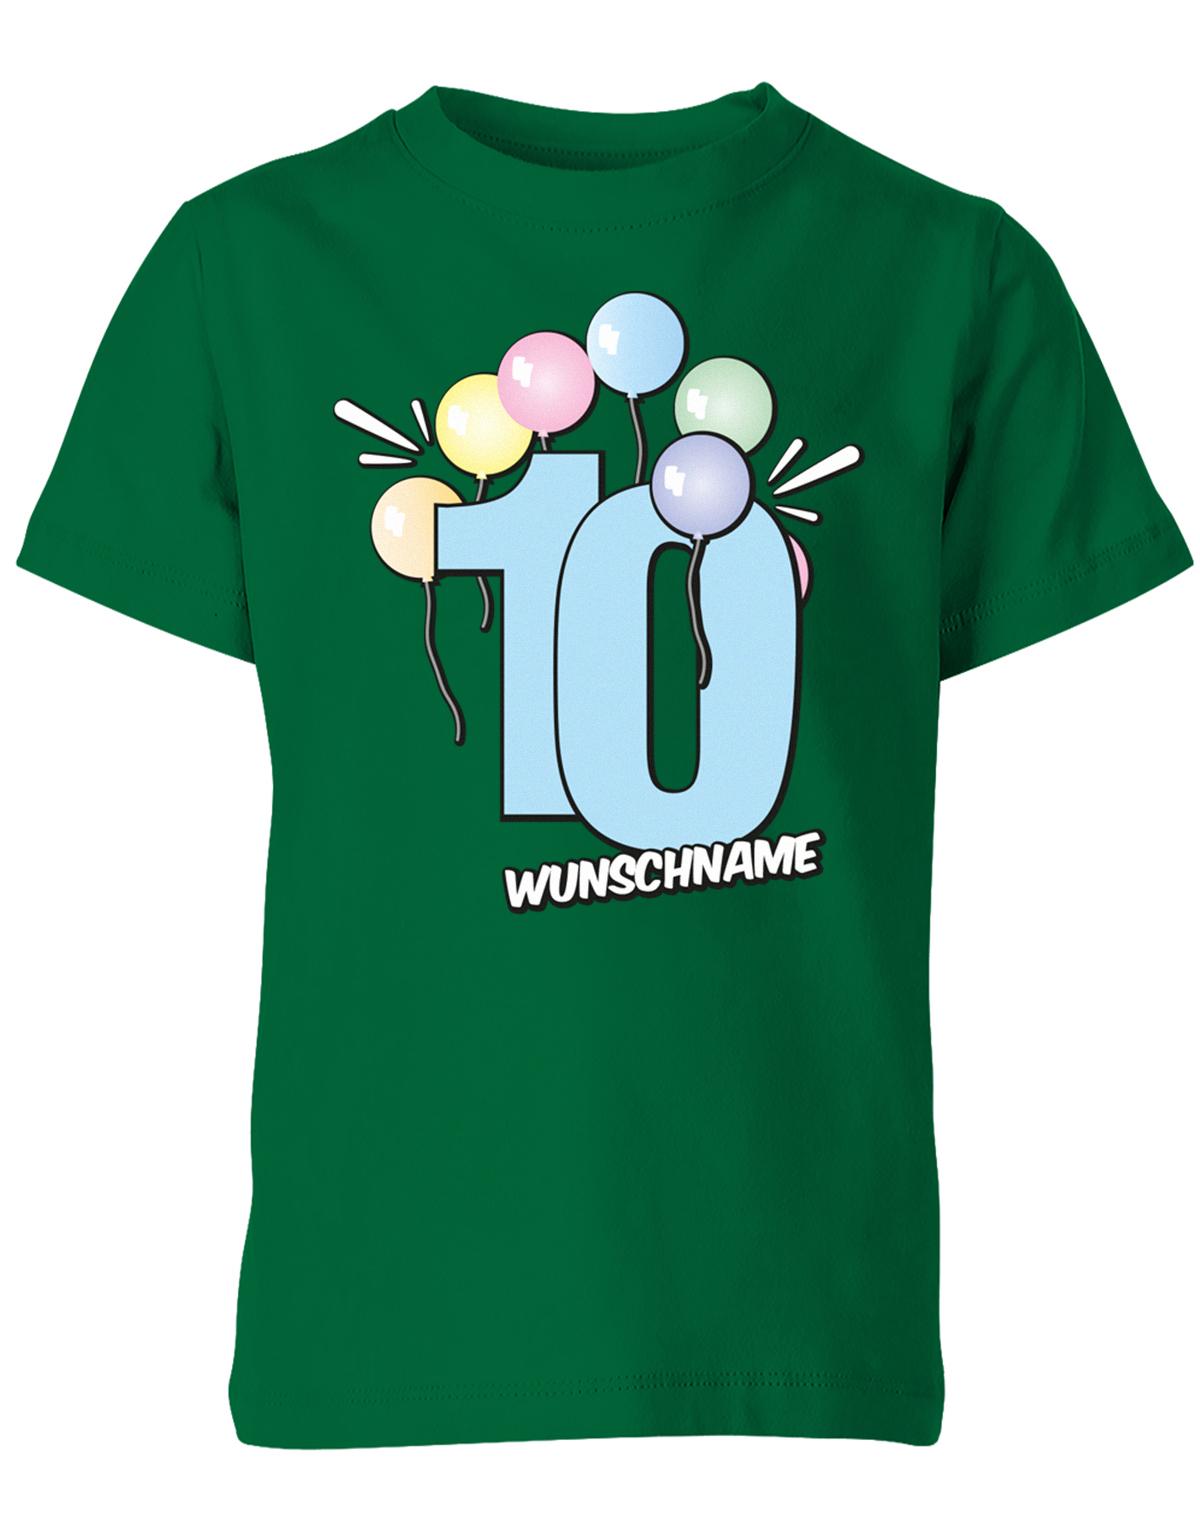 Luftballons-pastell-10-geburtstag-wunschname-kinder-shirt-gruen